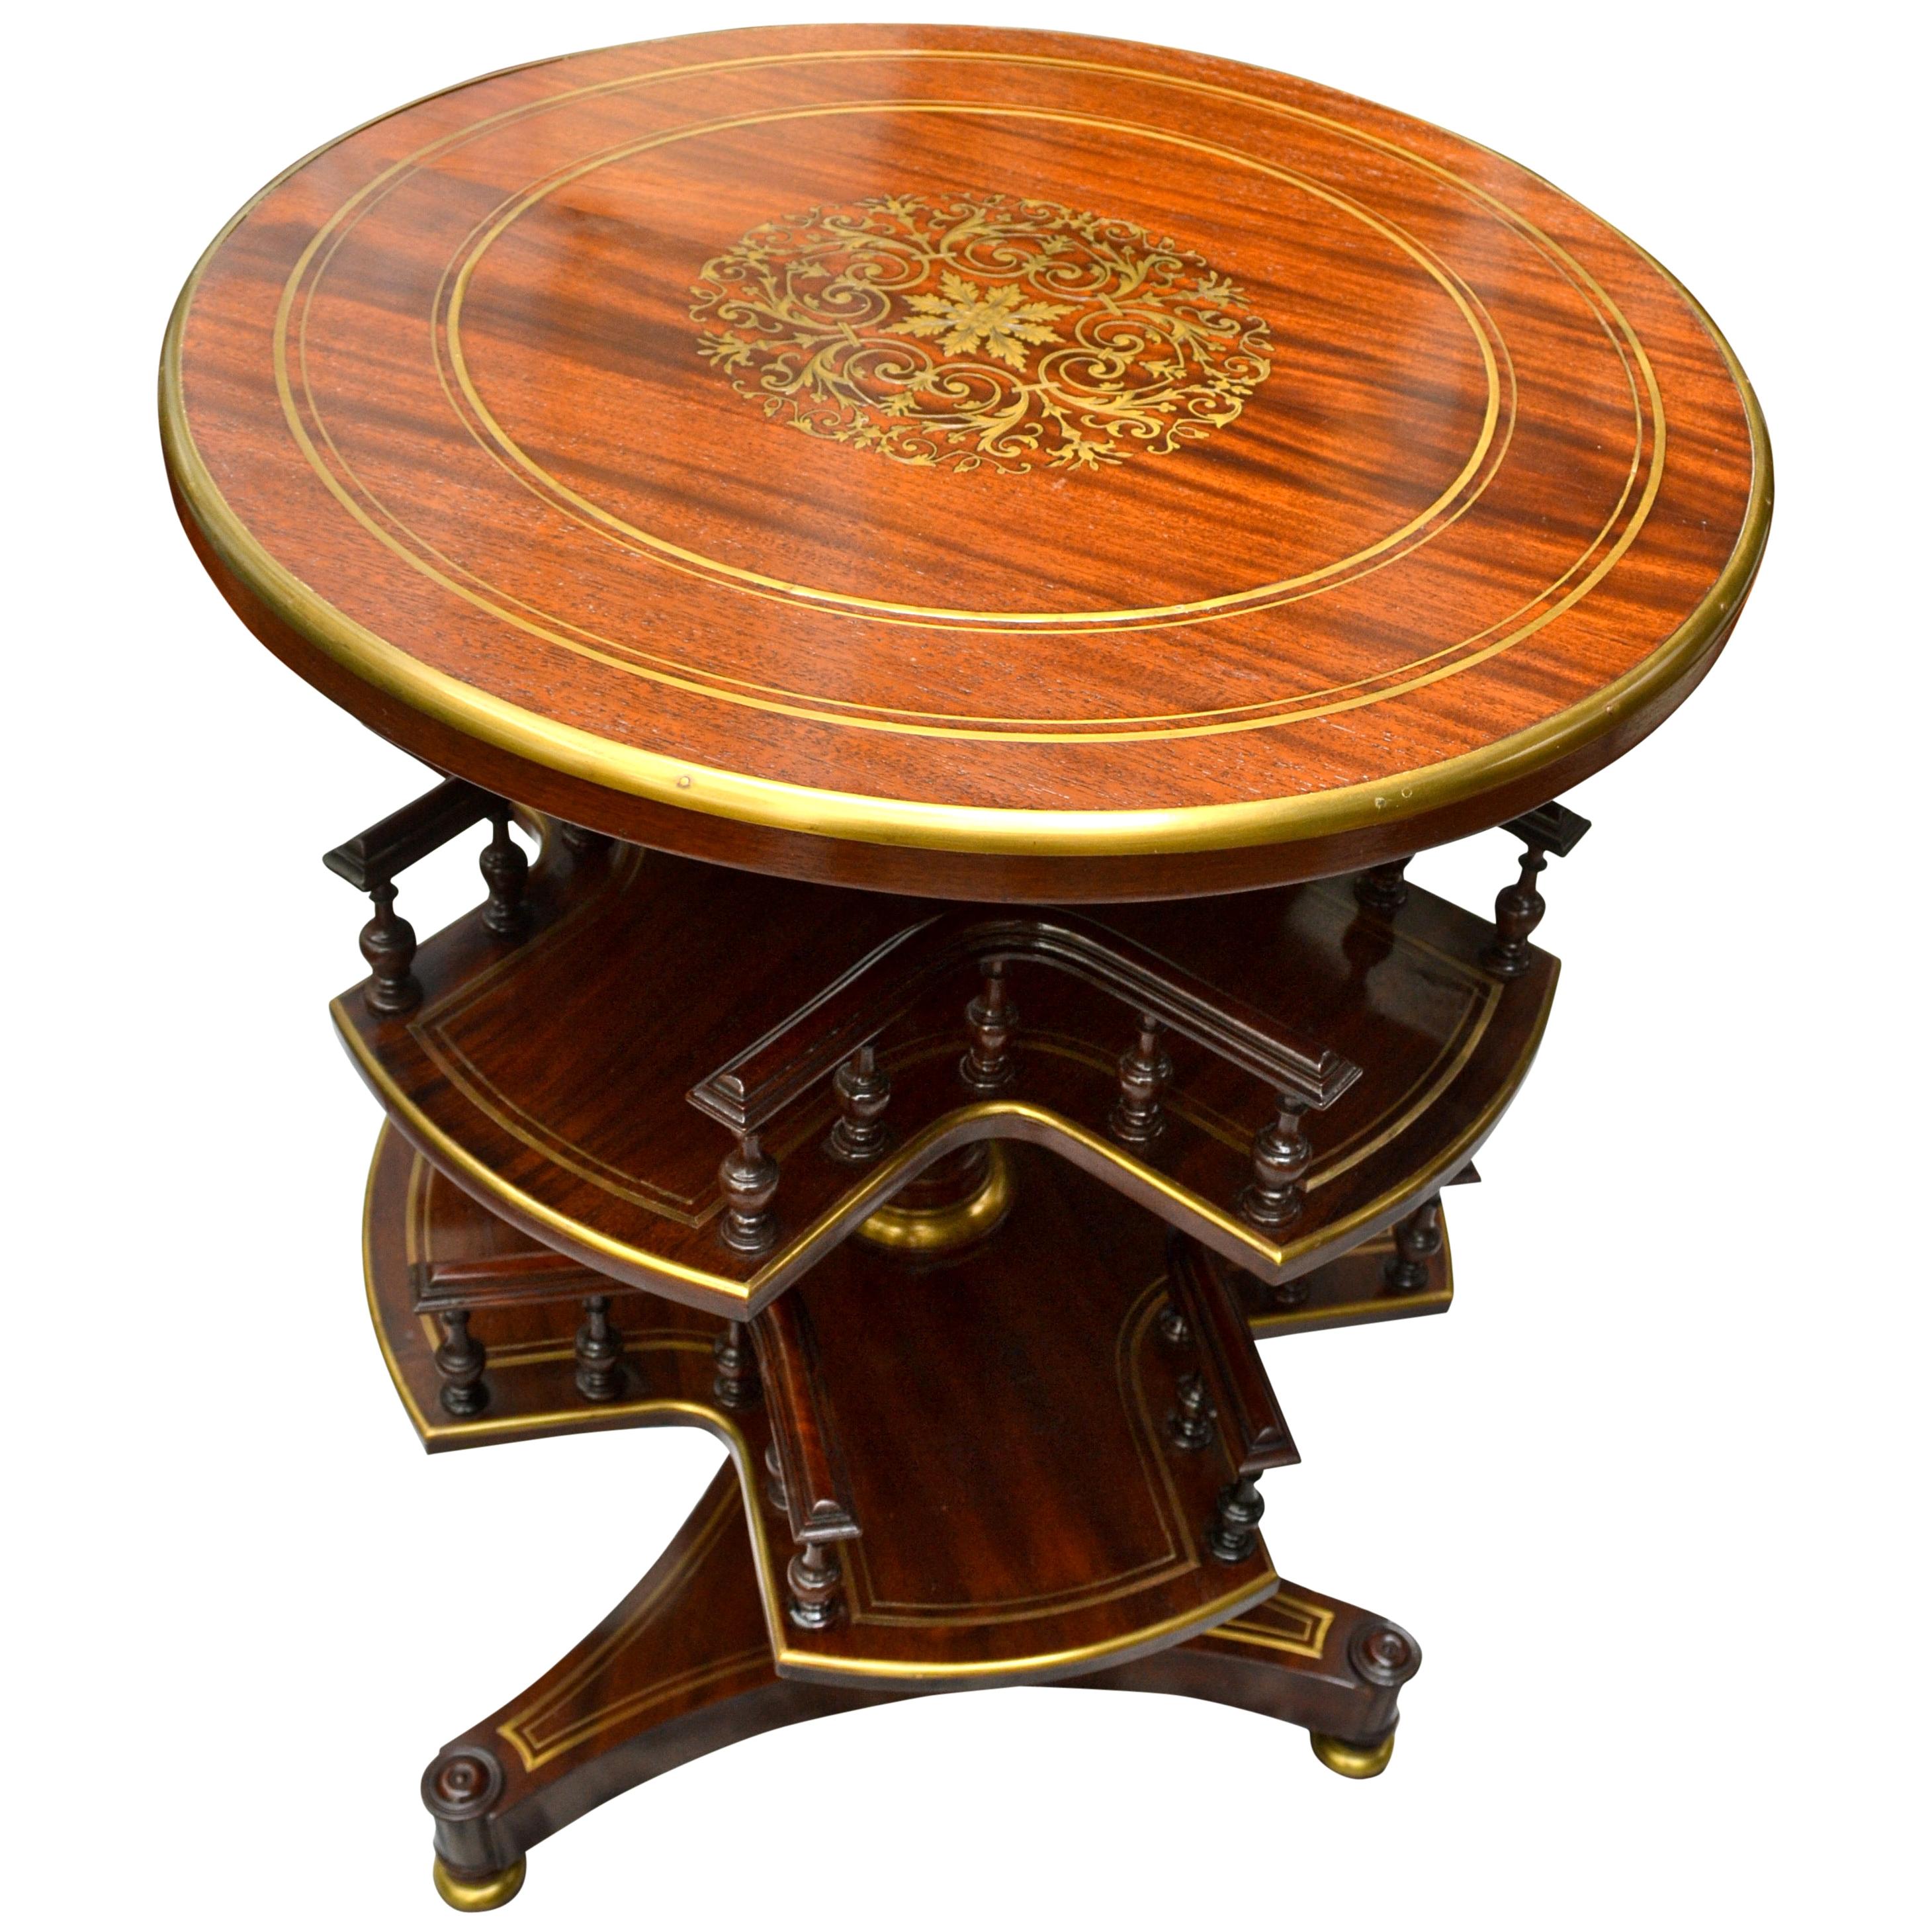 19th Century Regency Style English Carousel Table